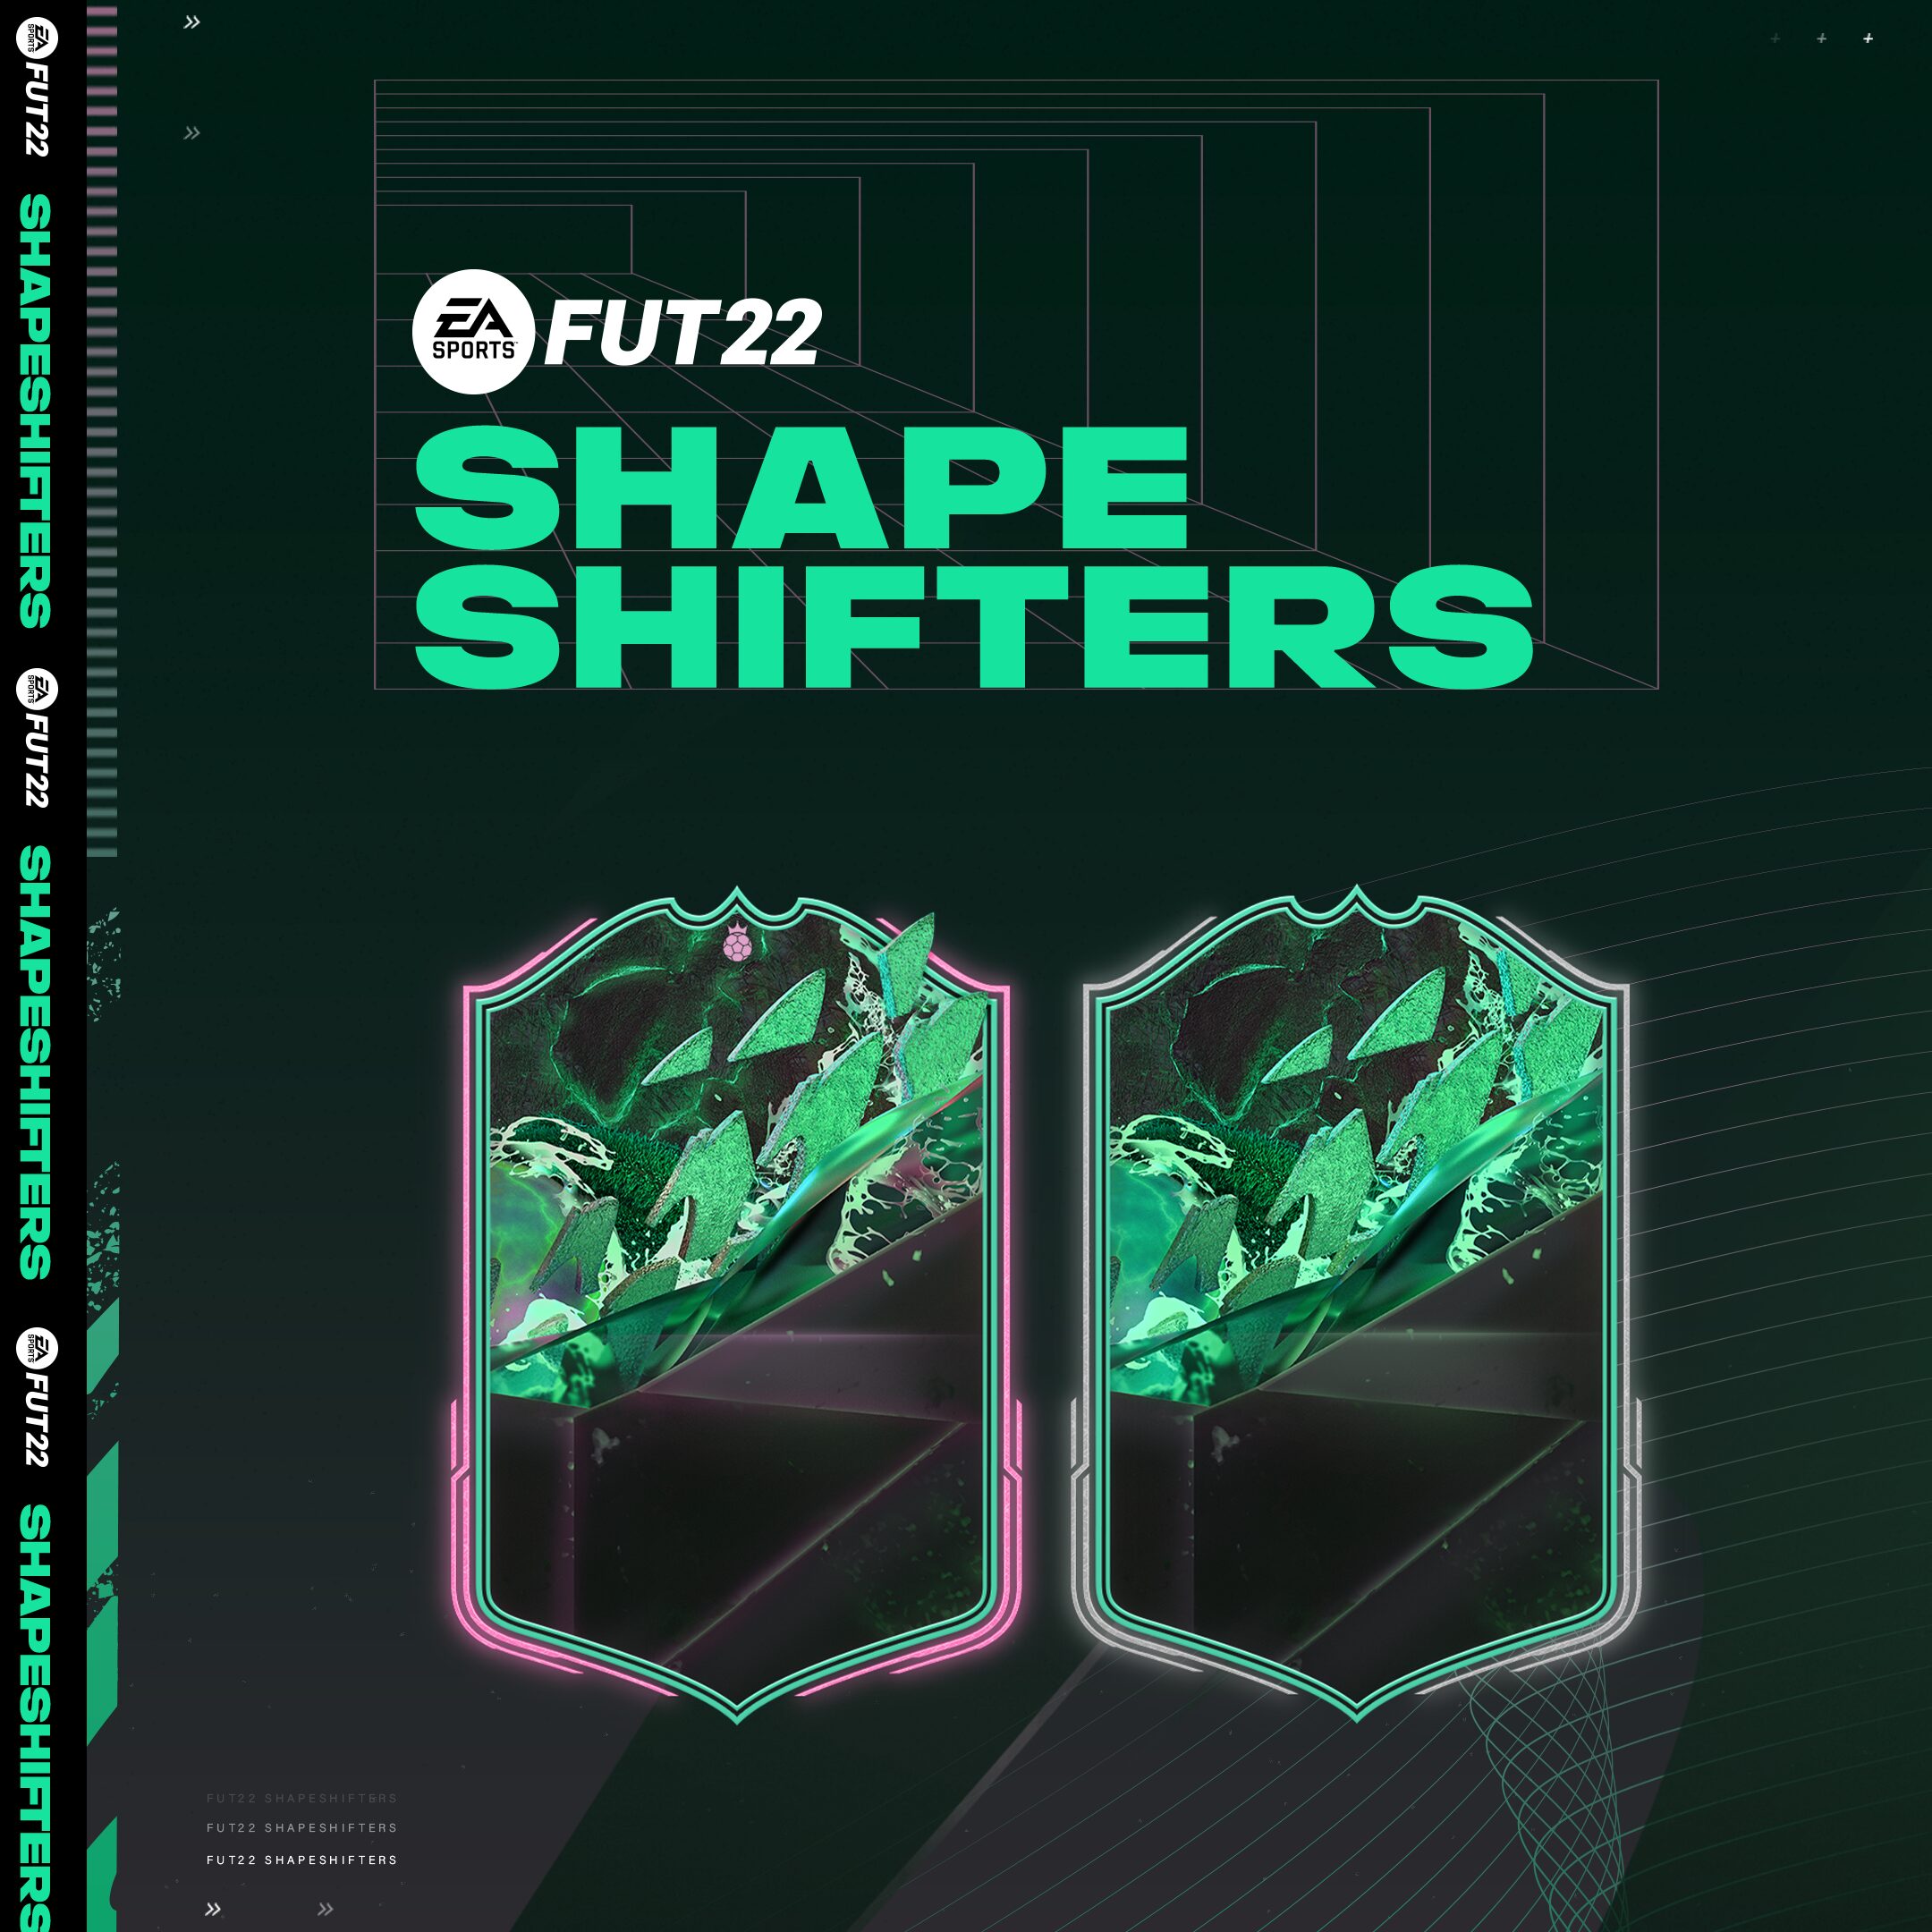 FIFA 22 FUT - Shapeshifters